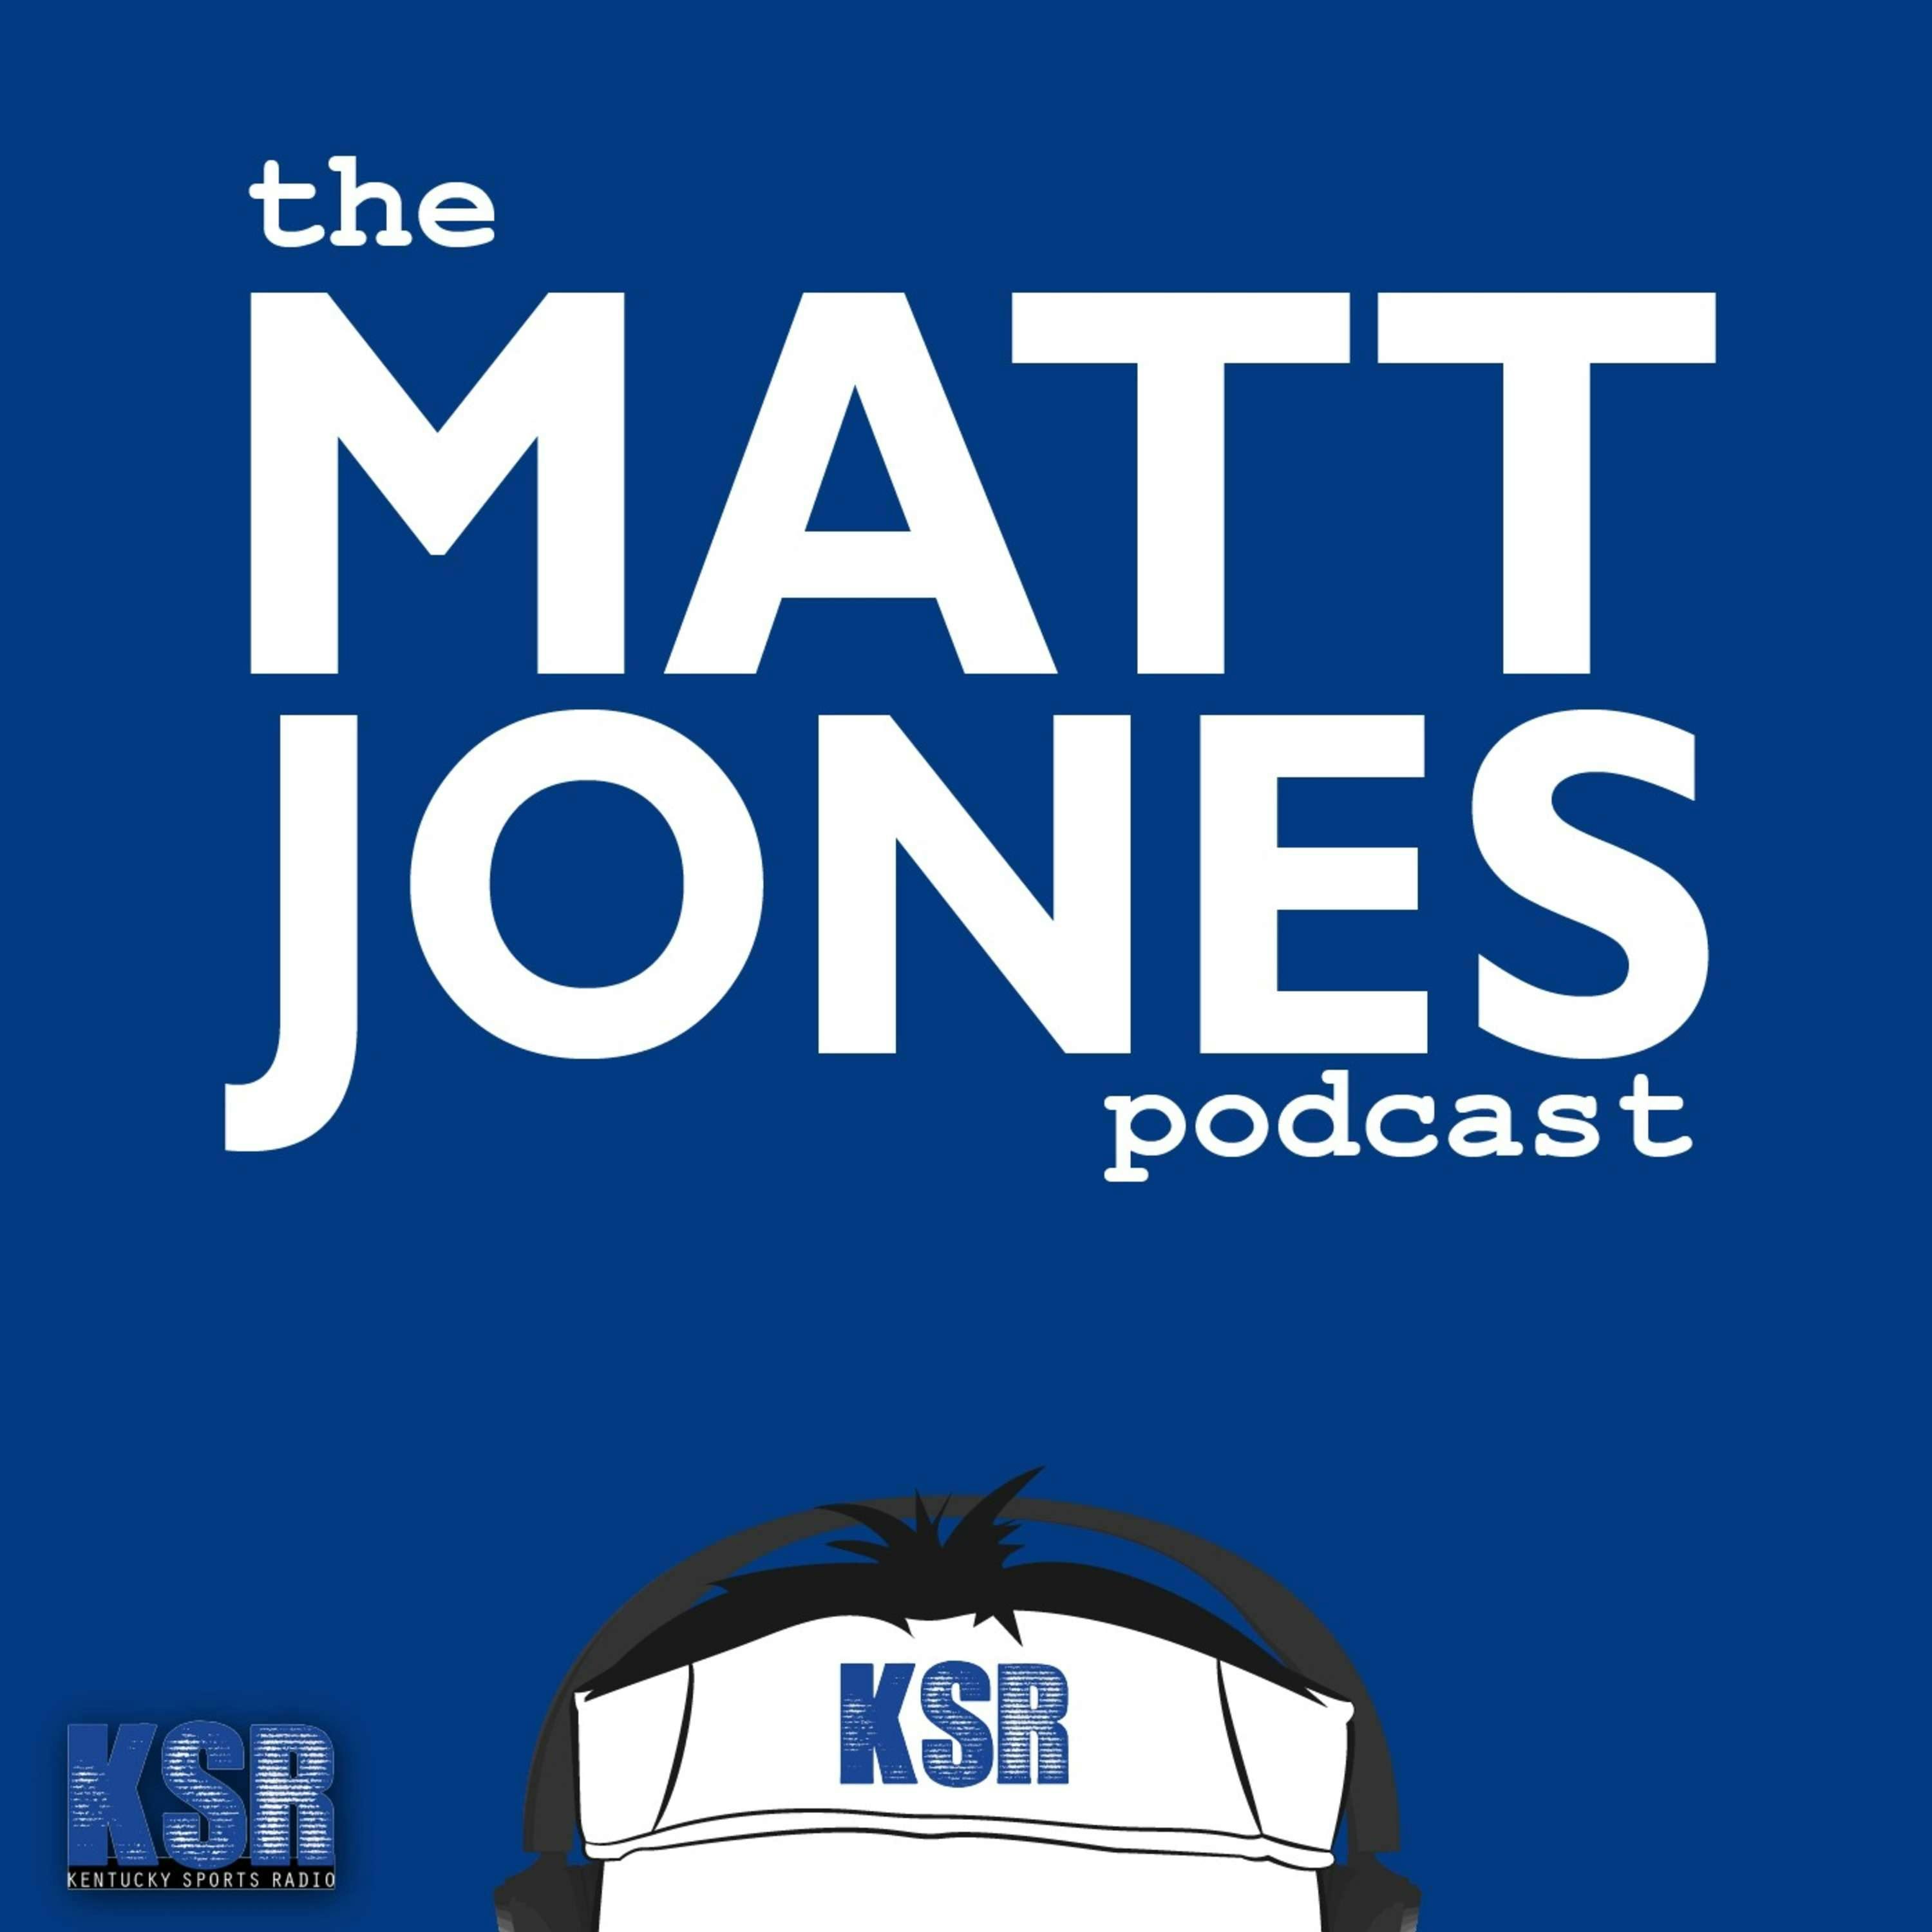 The Matt Jones Podcast: E40 Bomani Jones